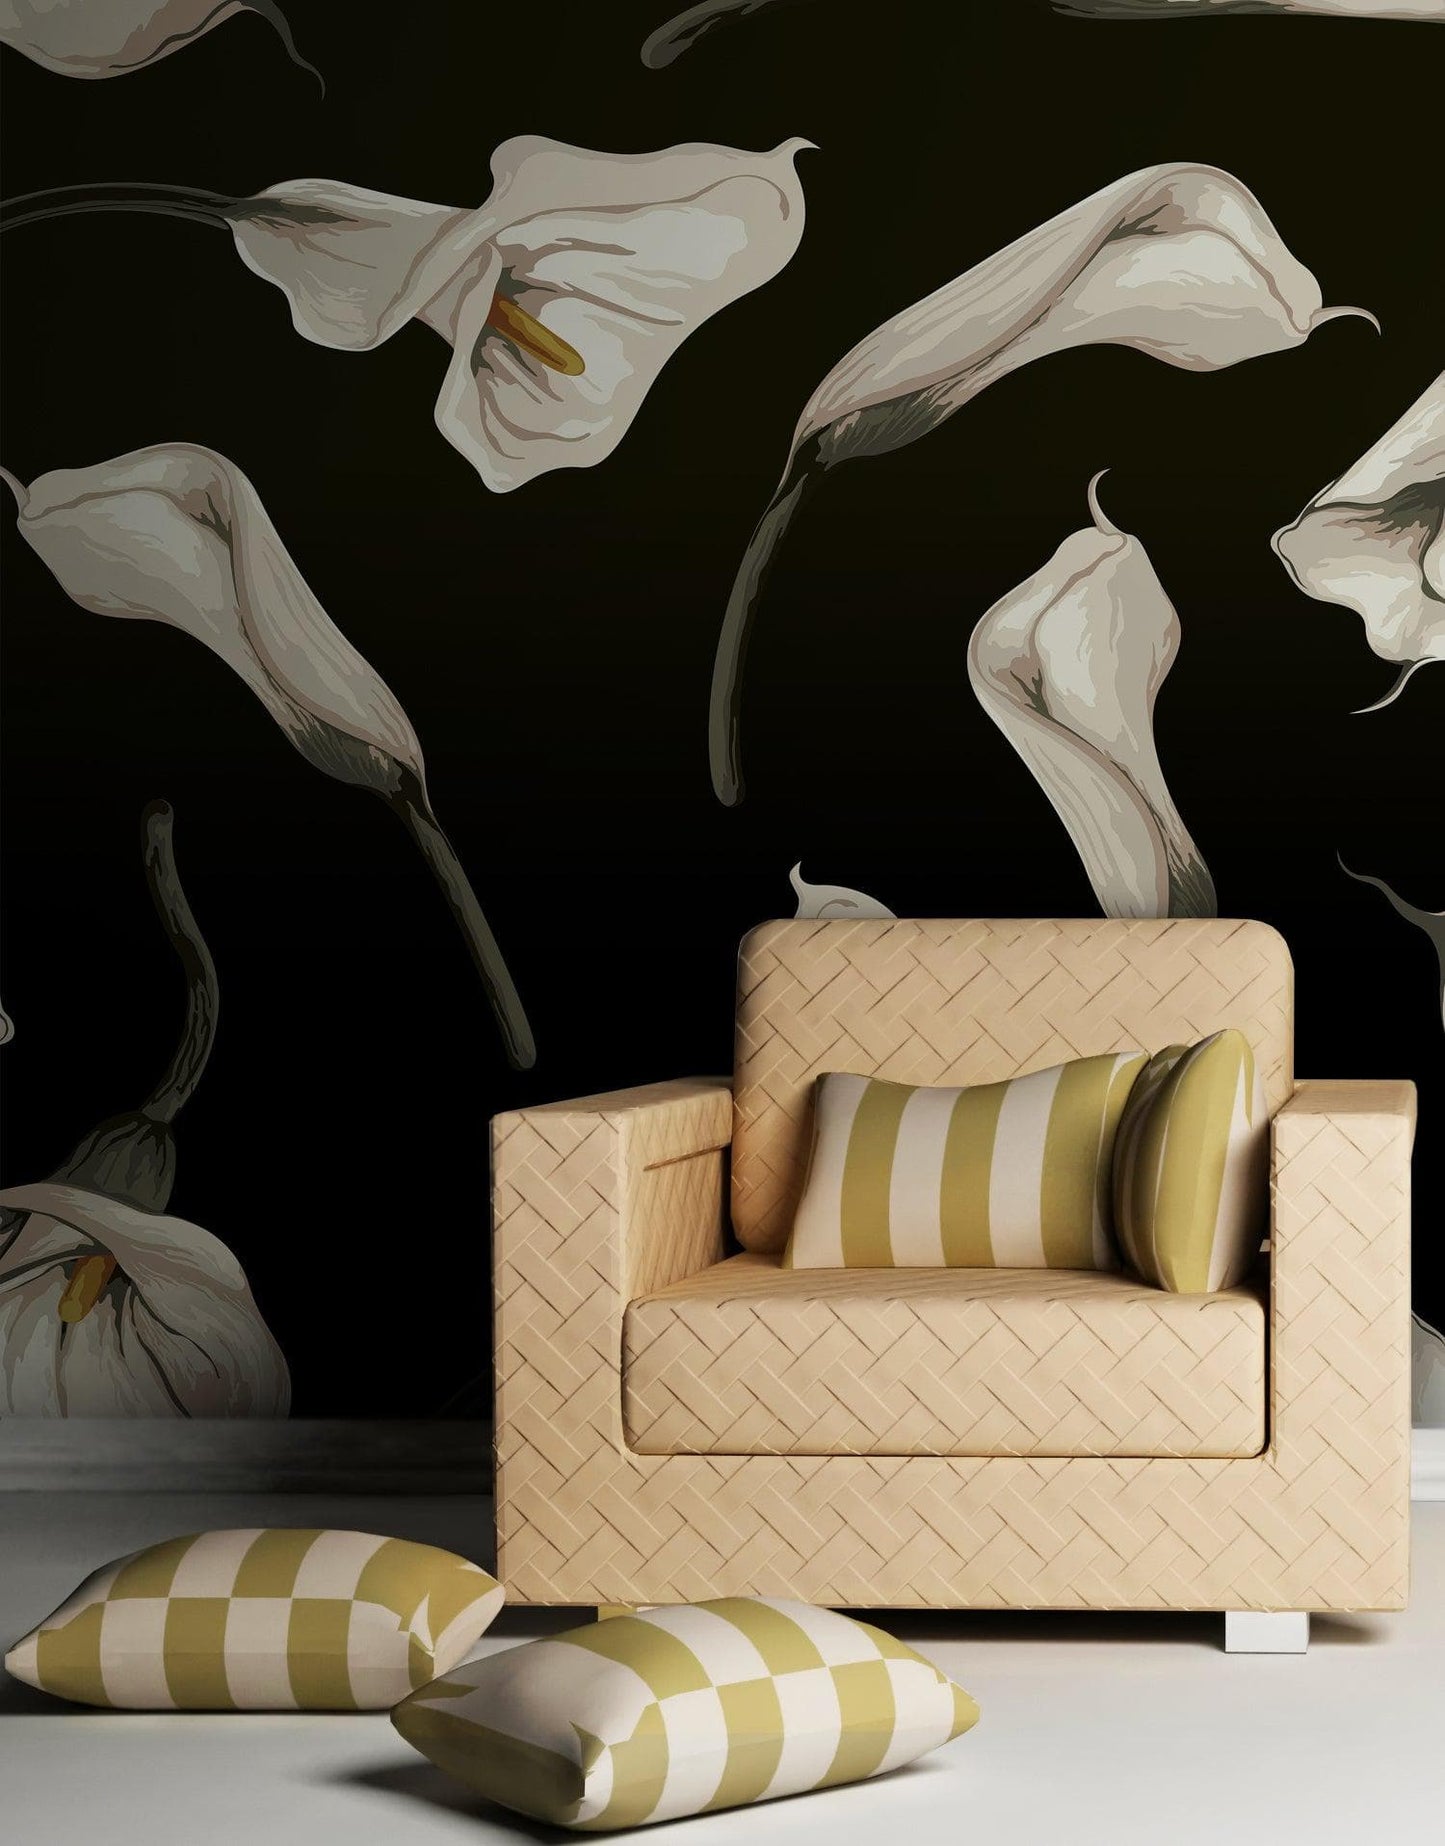 Elegant Rustic Tulip Flower Peel and Stick Wallpaper | Removable Wall Mural #6216